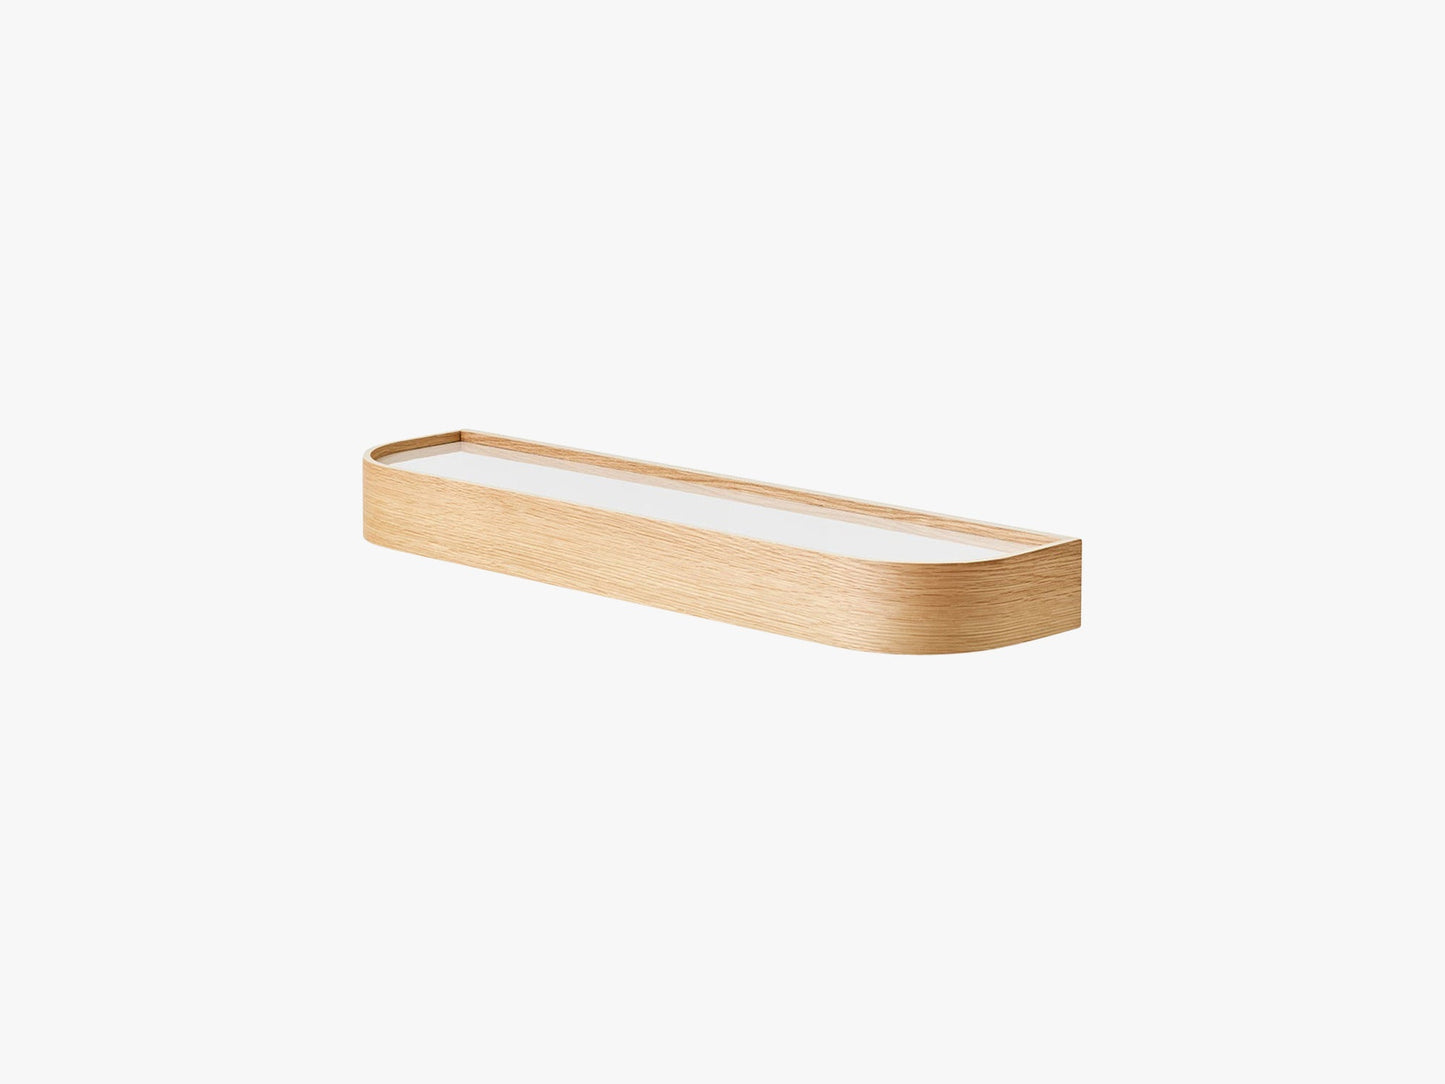 Epoch Shelf - Large, NatOak/Ivory